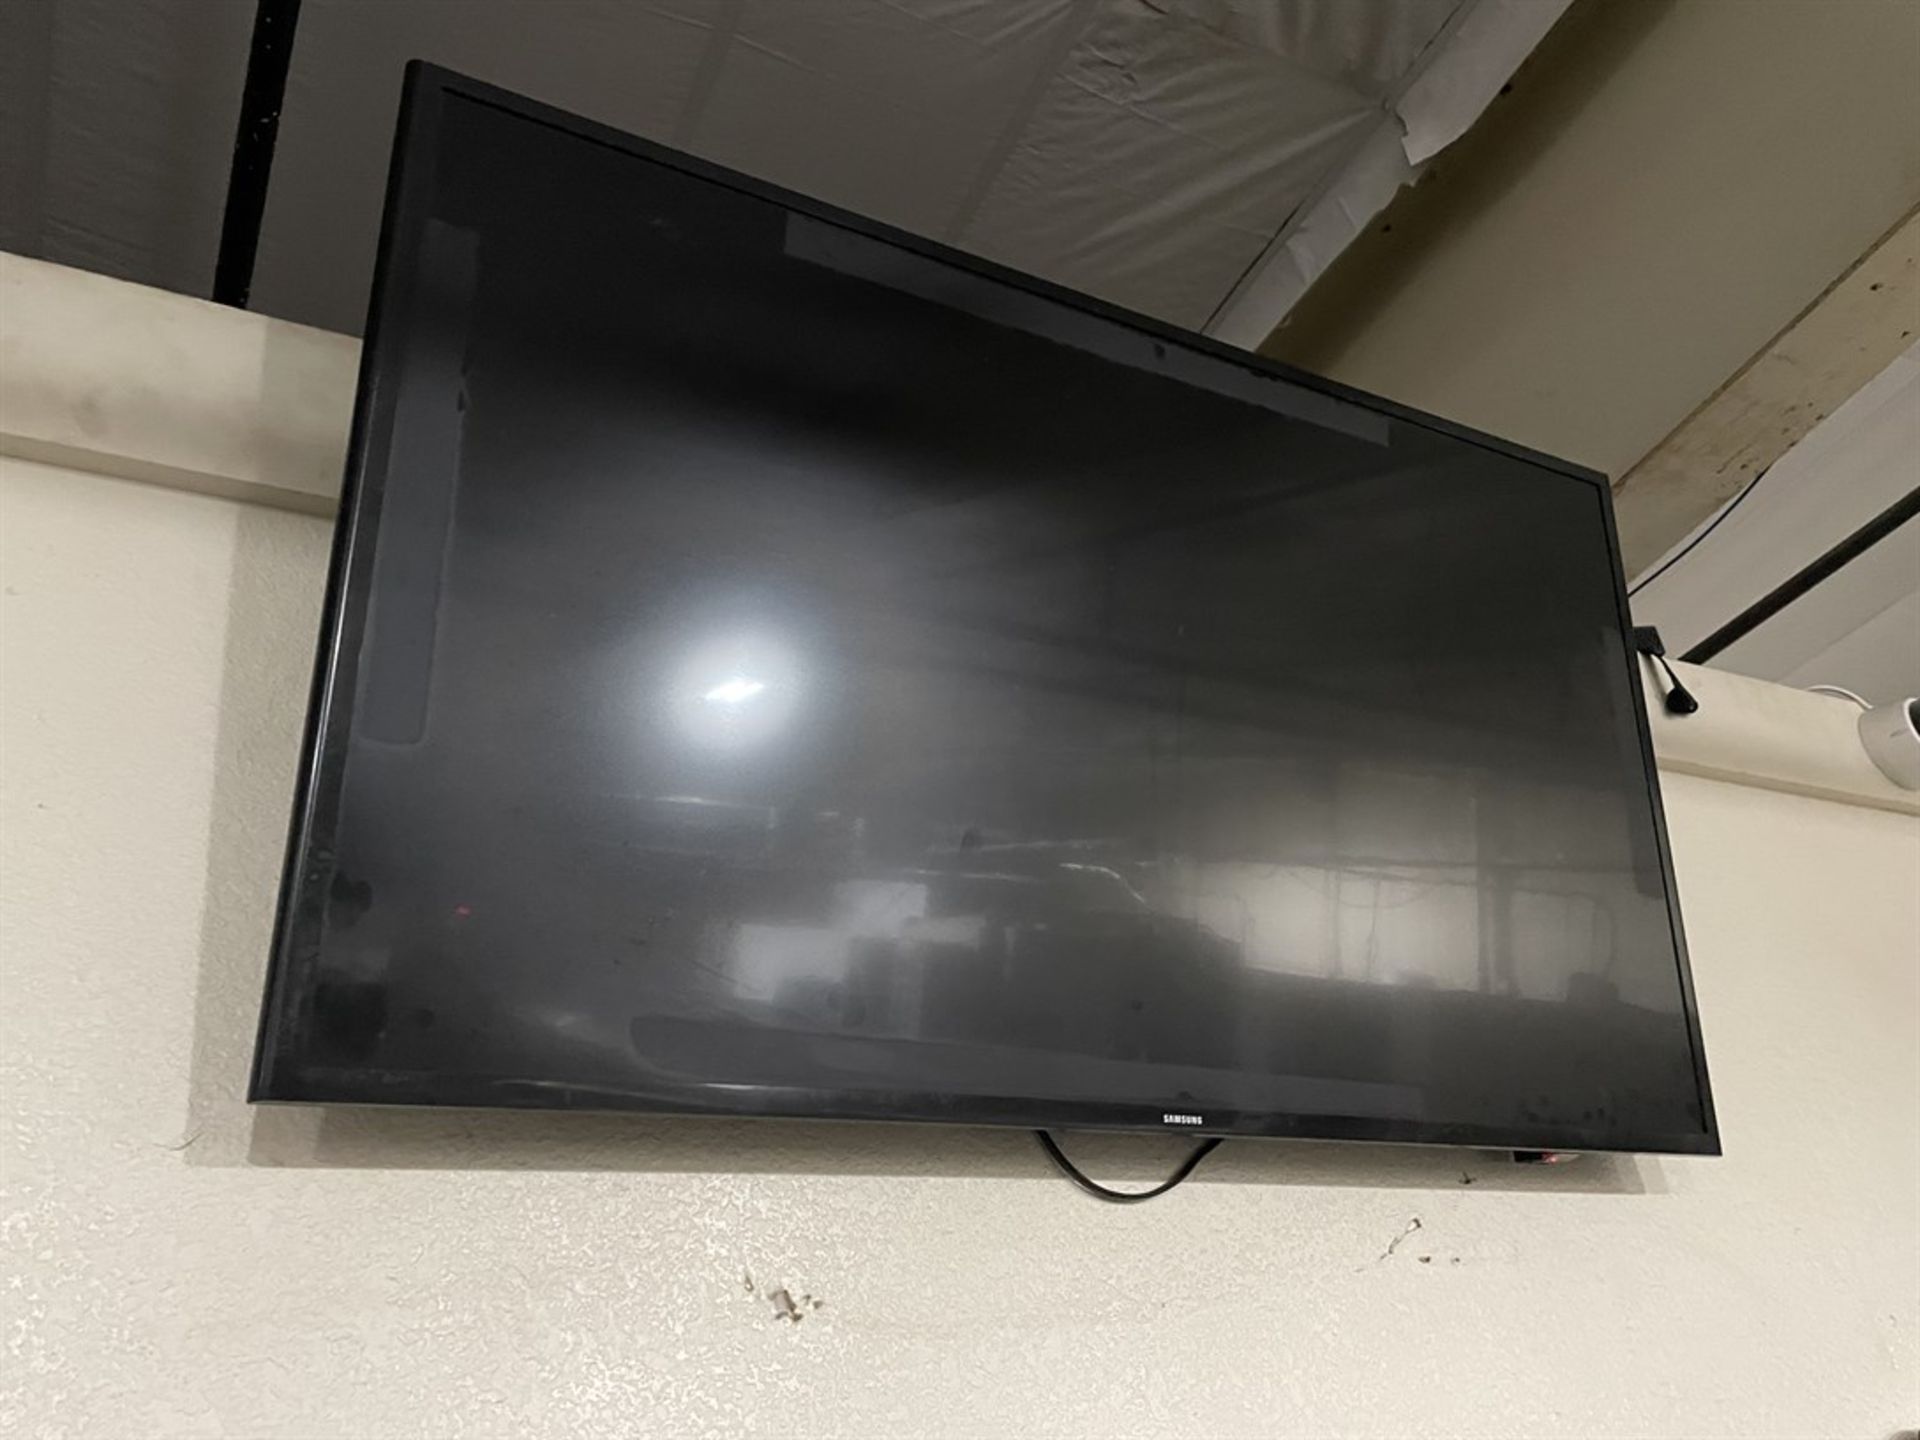 Samsung 48" Flat Screen TV (By Haas)